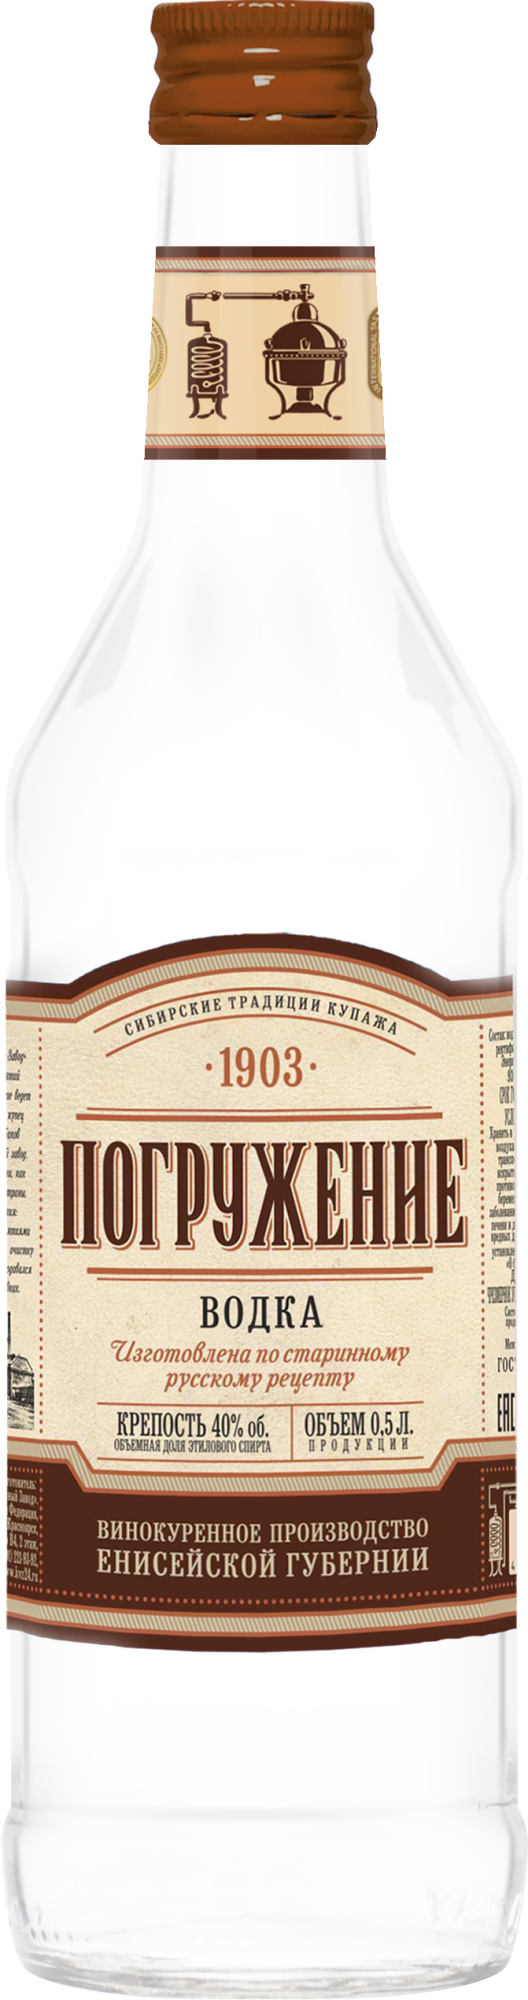 Immersion» Vodka - Красноярский водочный завод